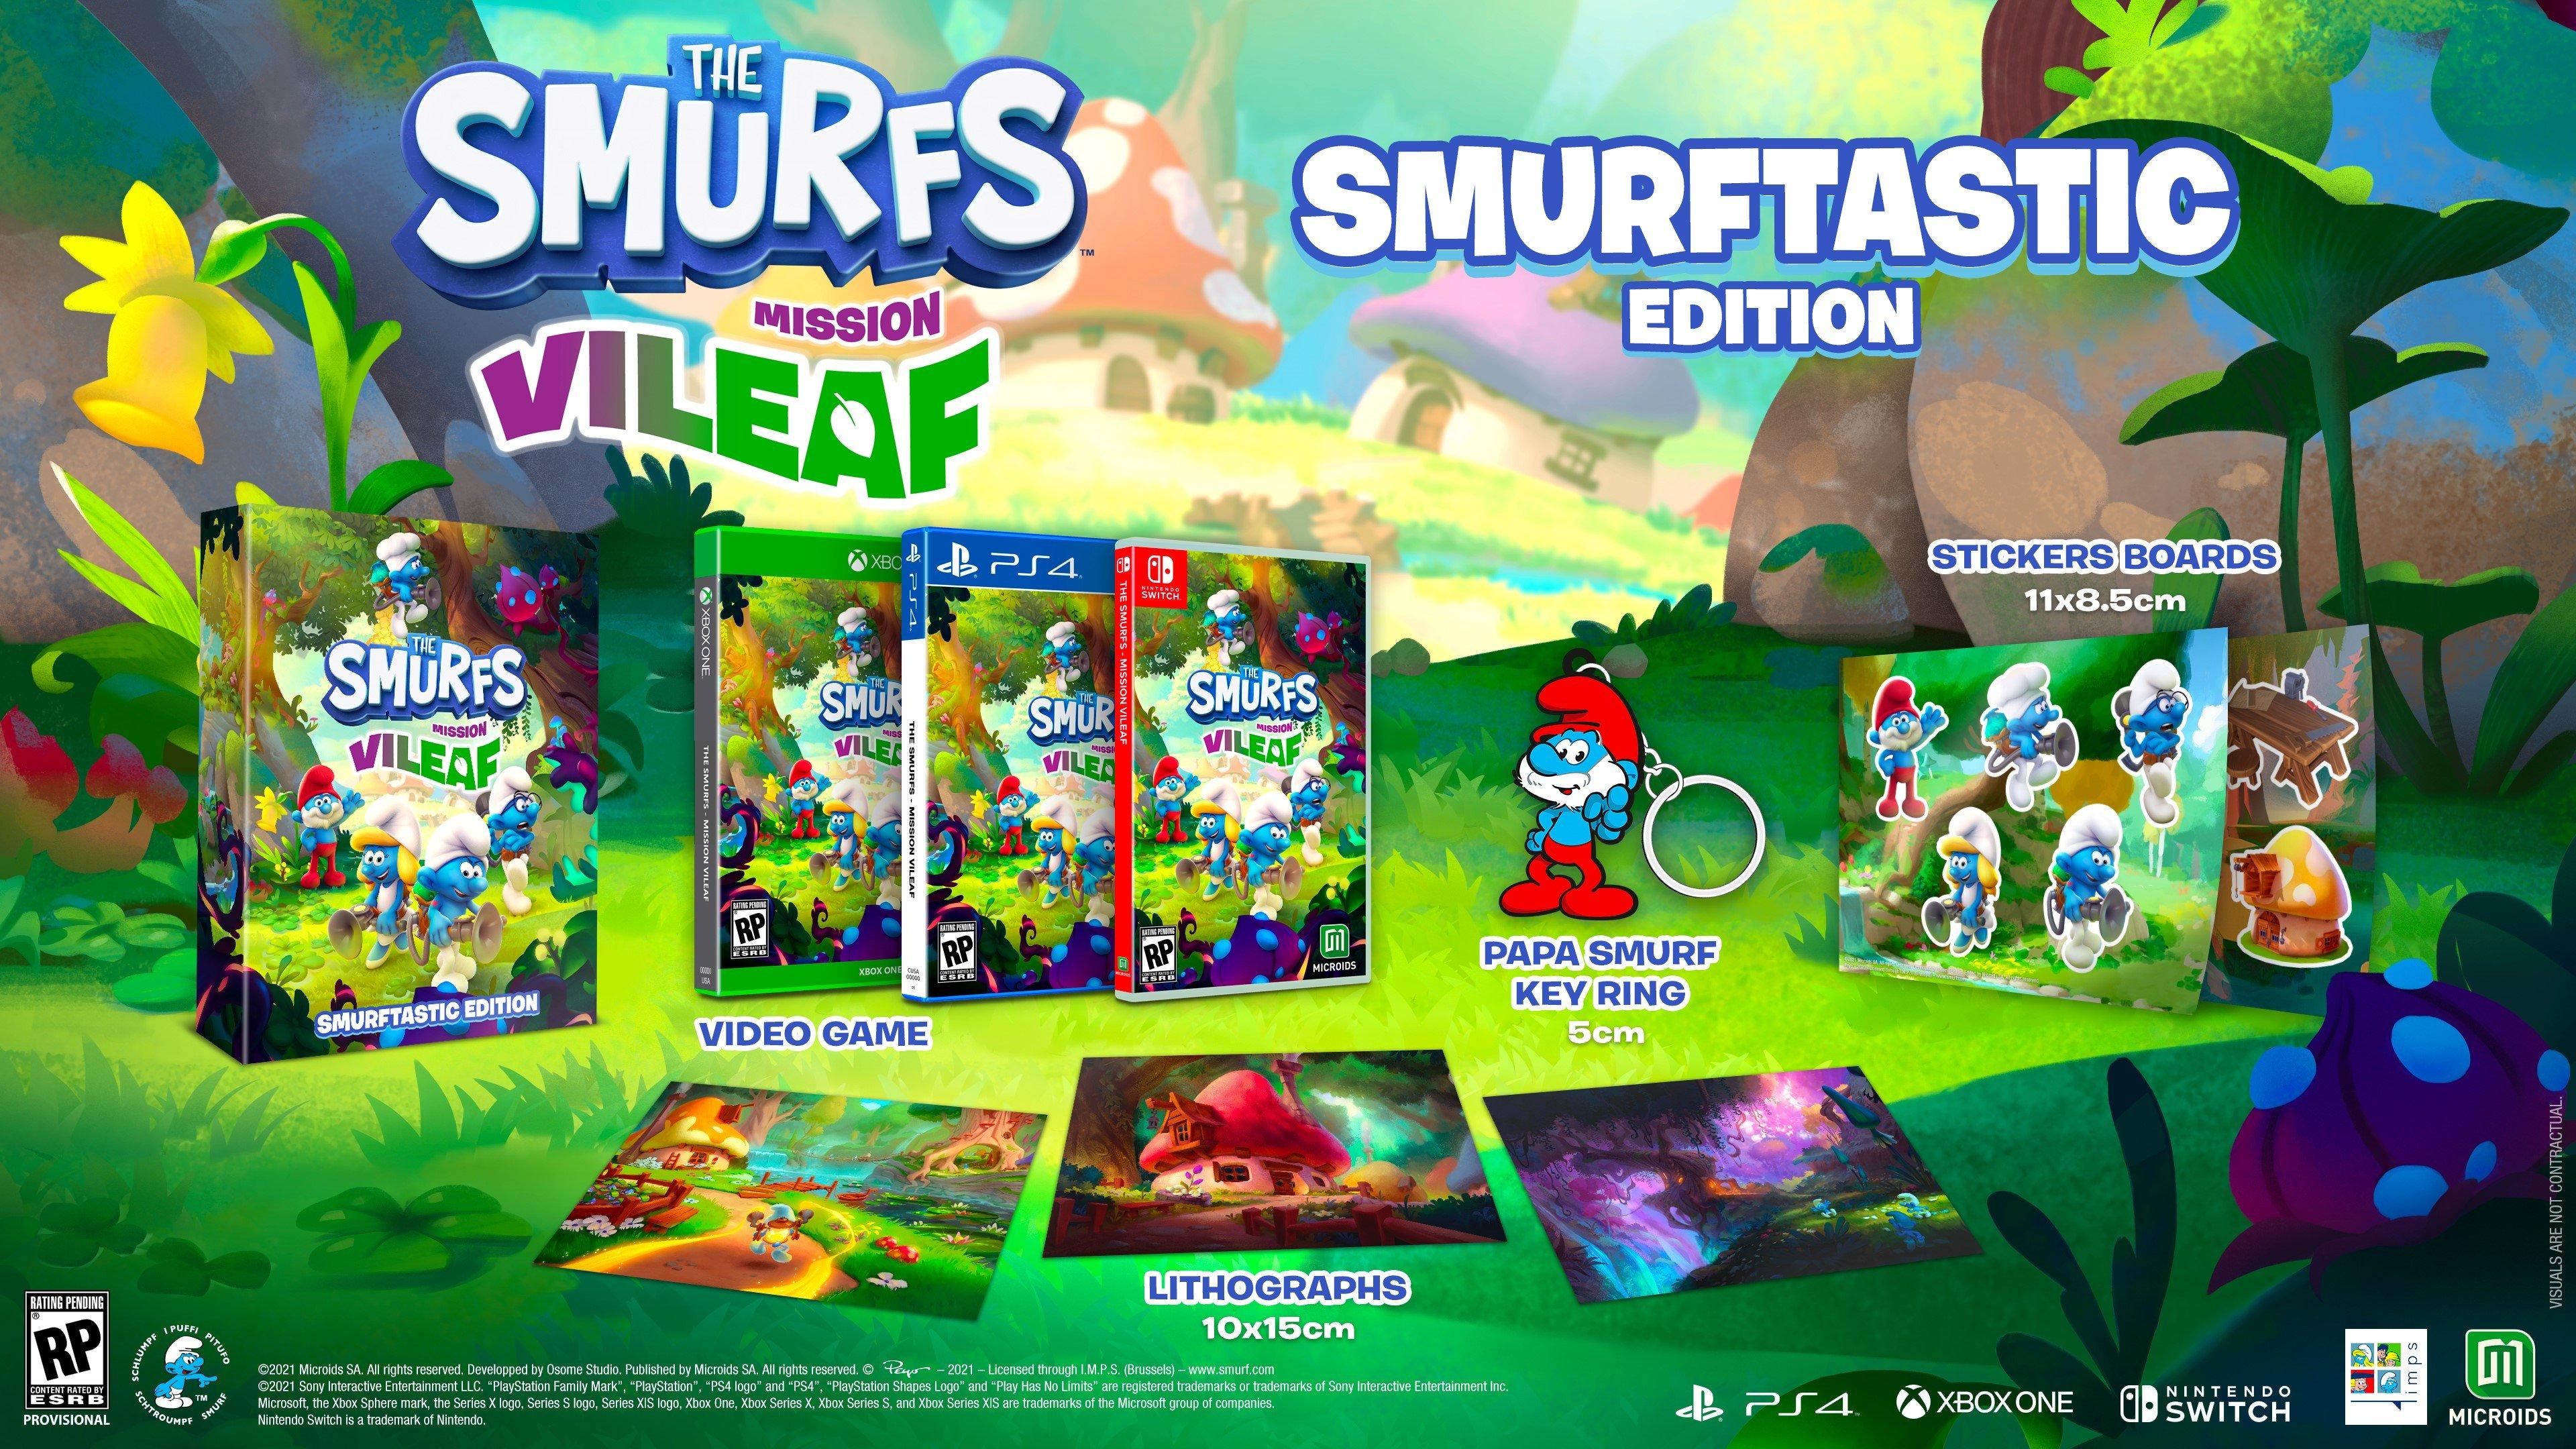 The Smurfs Mission Vileaf Preorder Bonuses no Steam